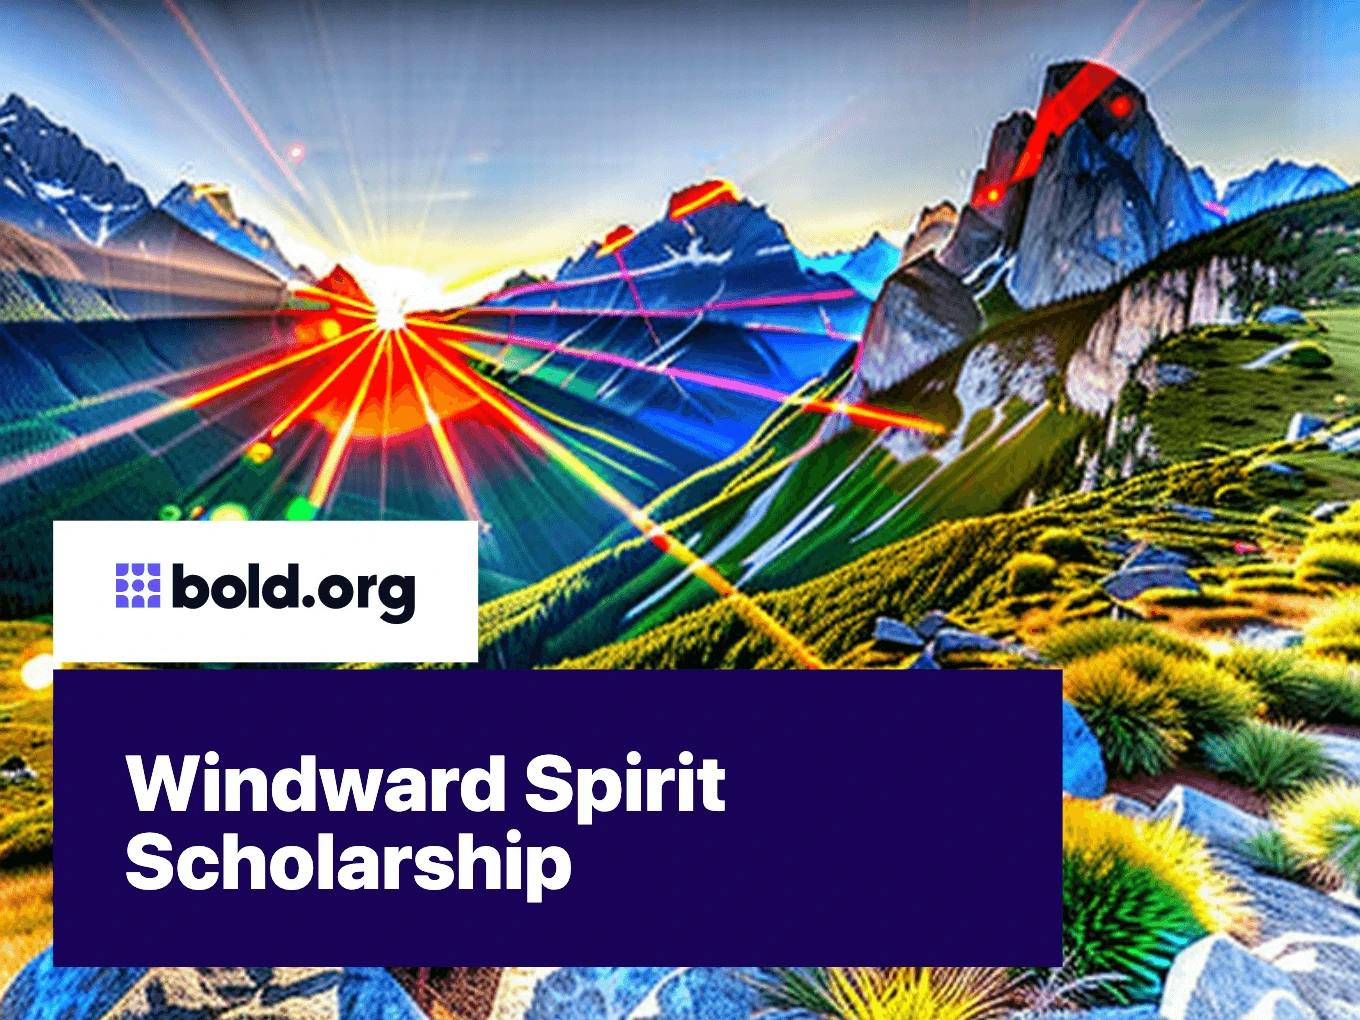 Windward Spirit Scholarship